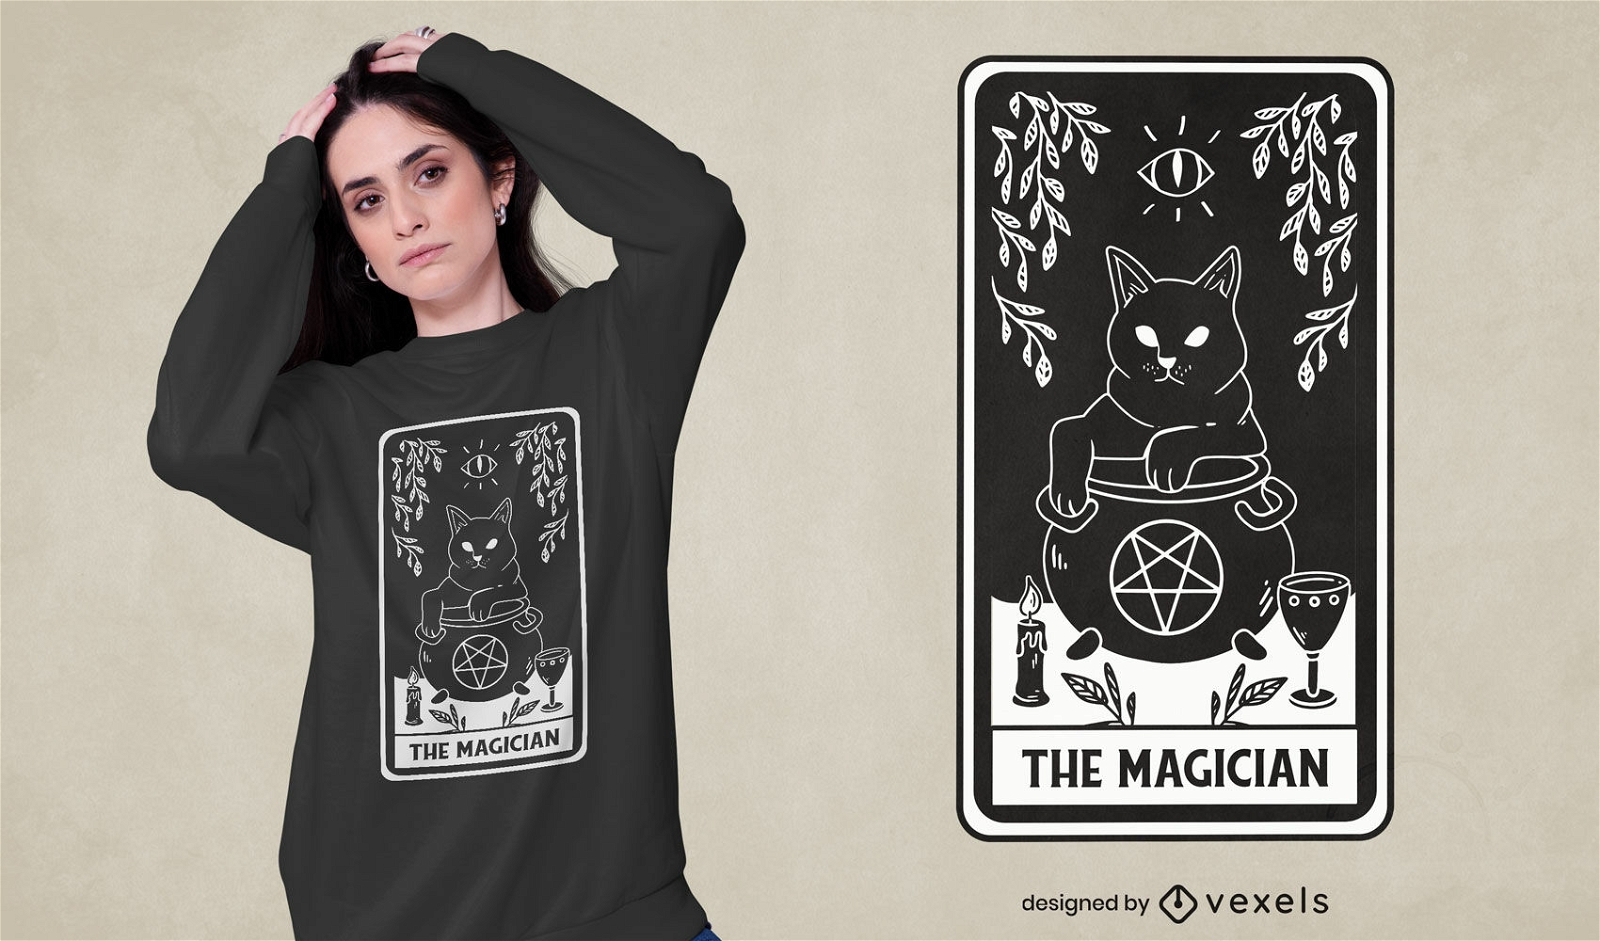 Das T-Shirt-Design der Magier-Tarotkarte